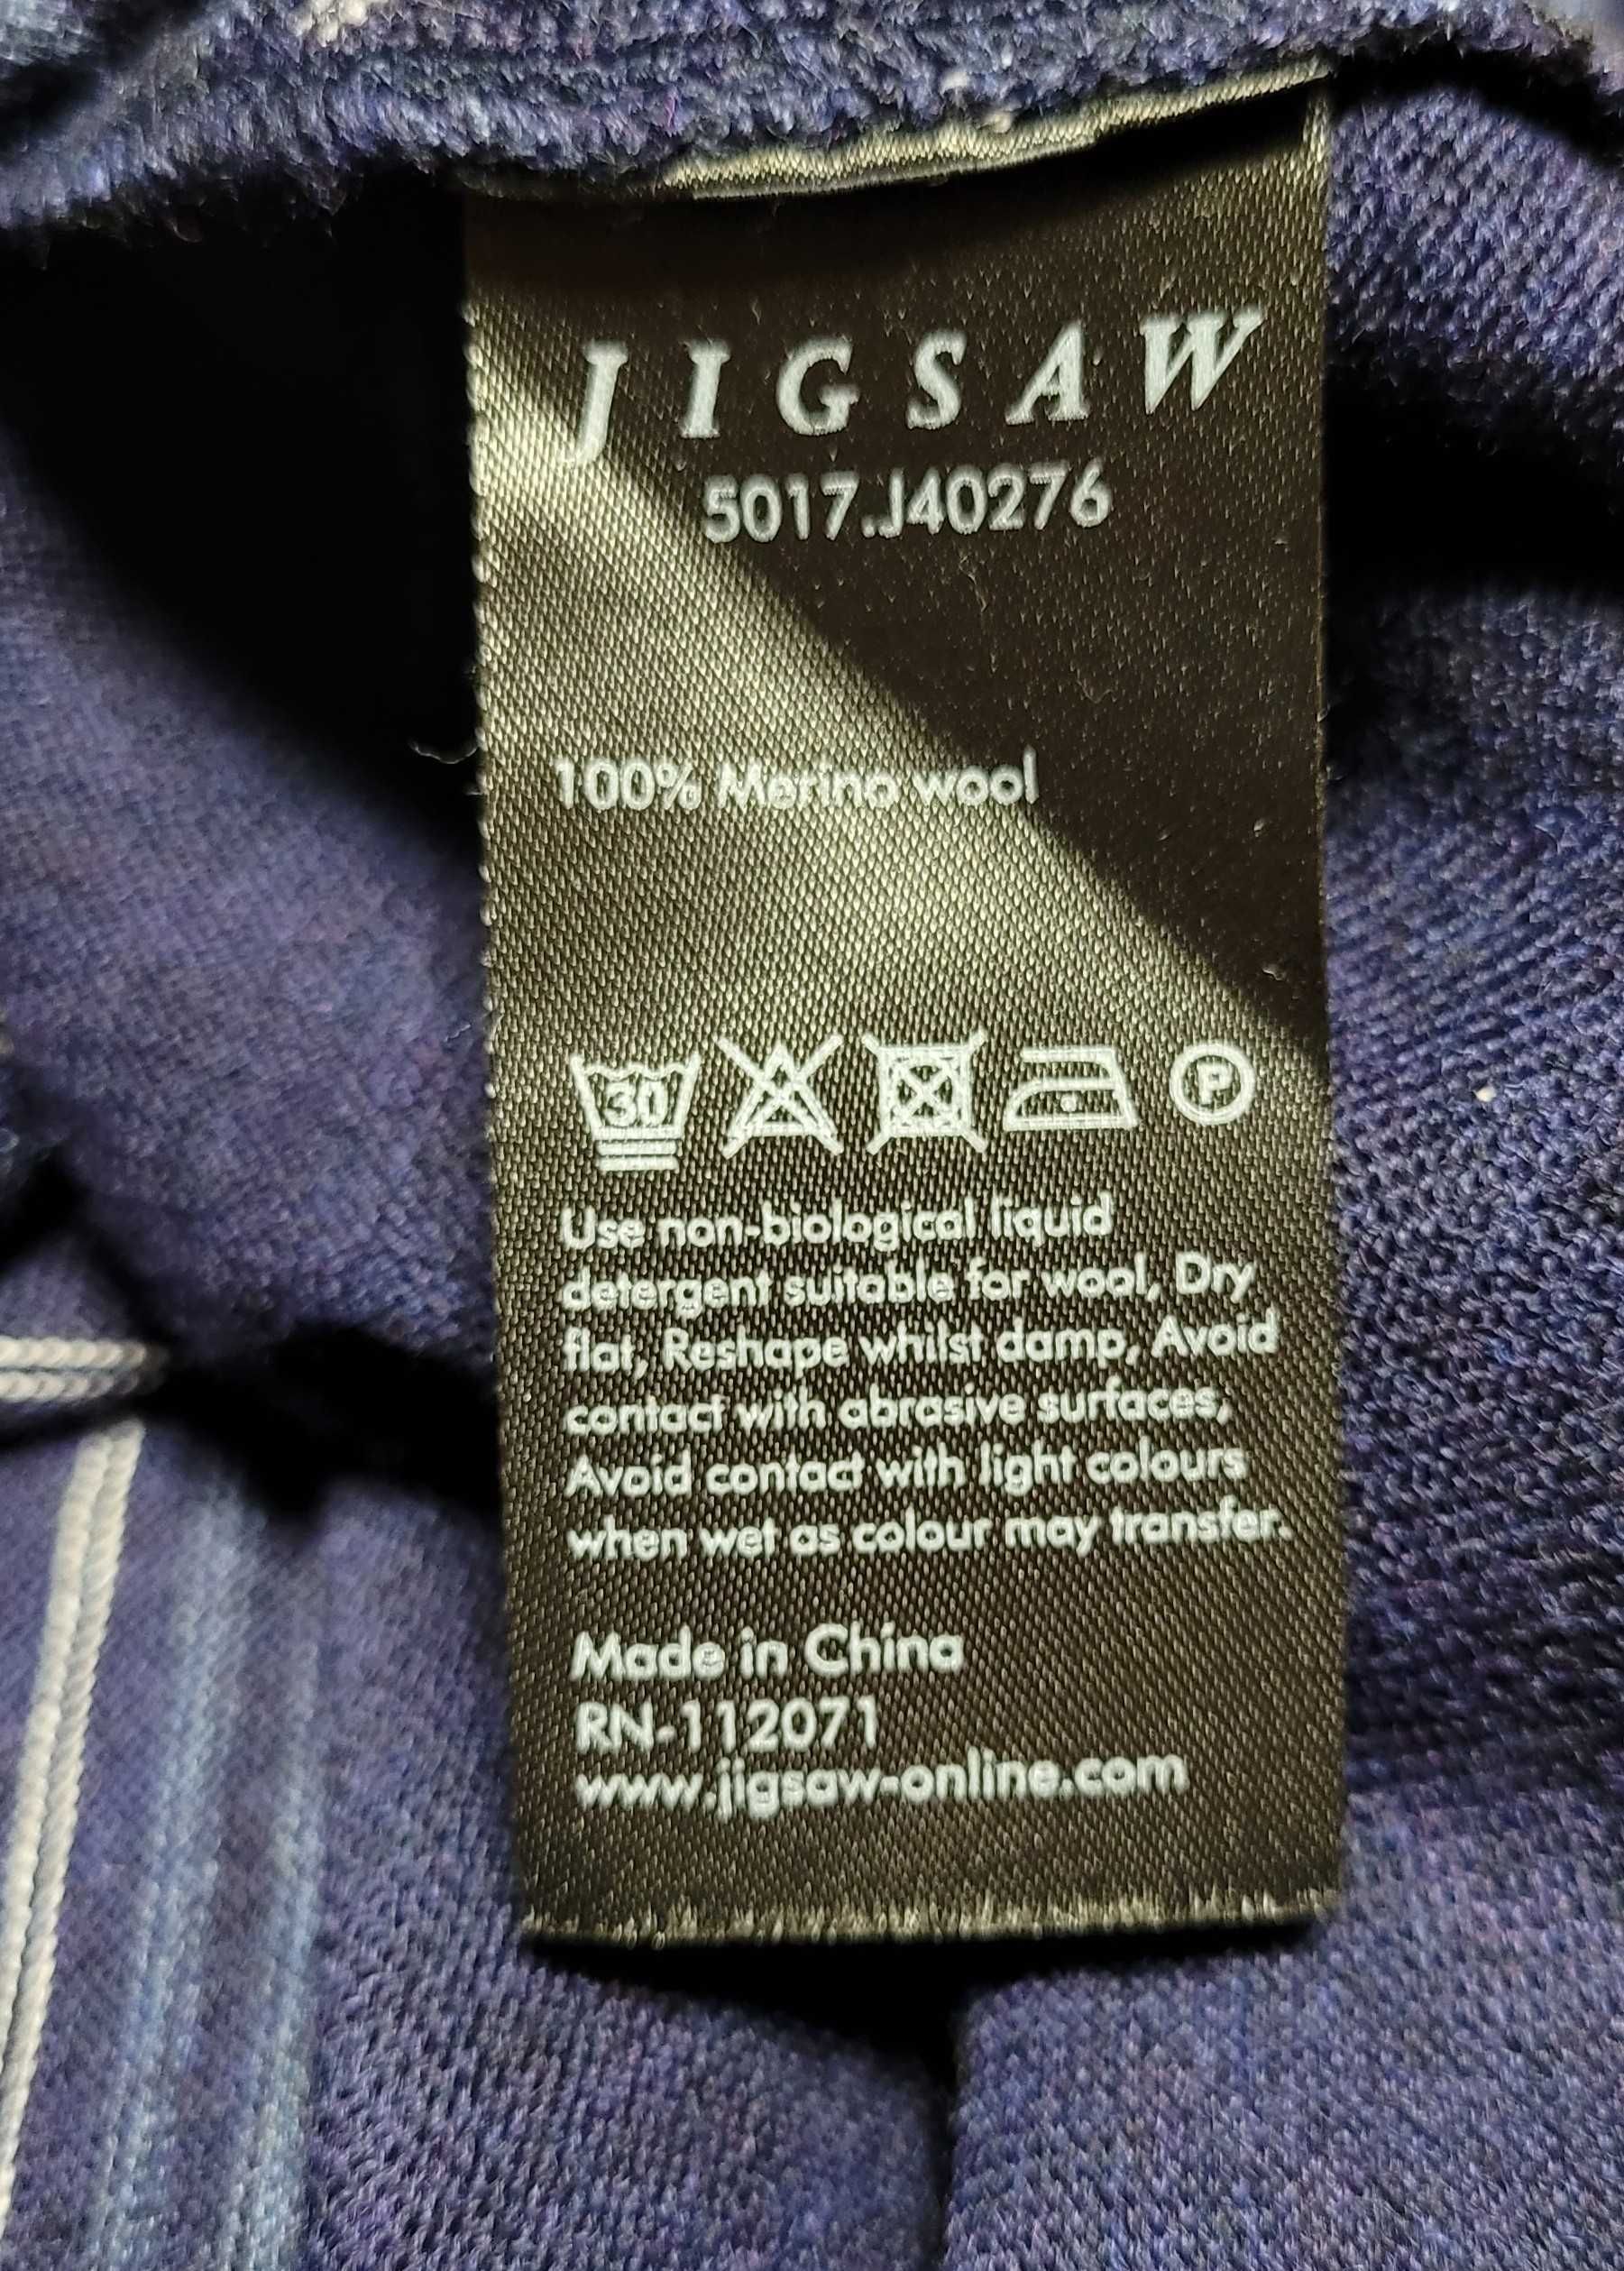 Тонкий свитер Jigsaw (меринос).